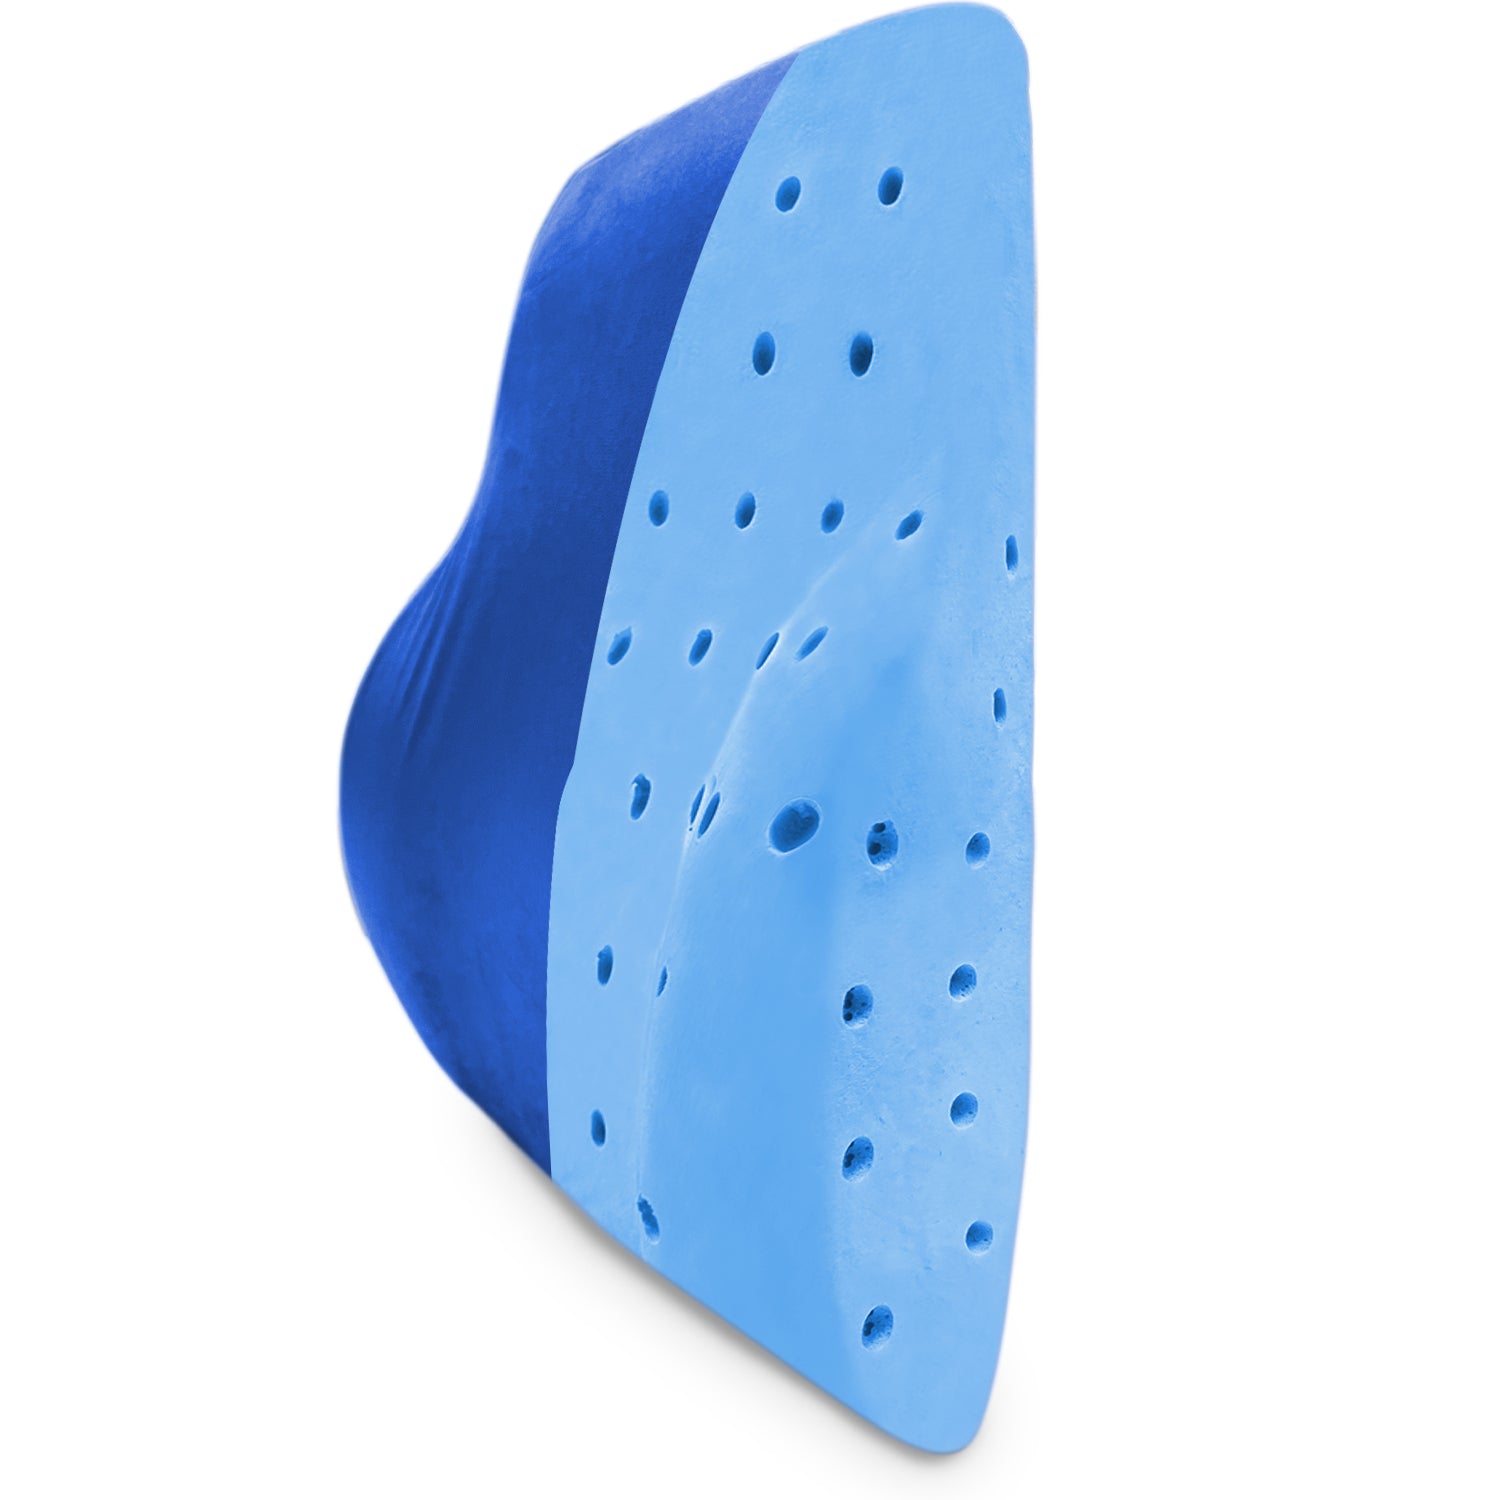 Orthopedic Memory Foam Lumbar Support Backrest Cushion